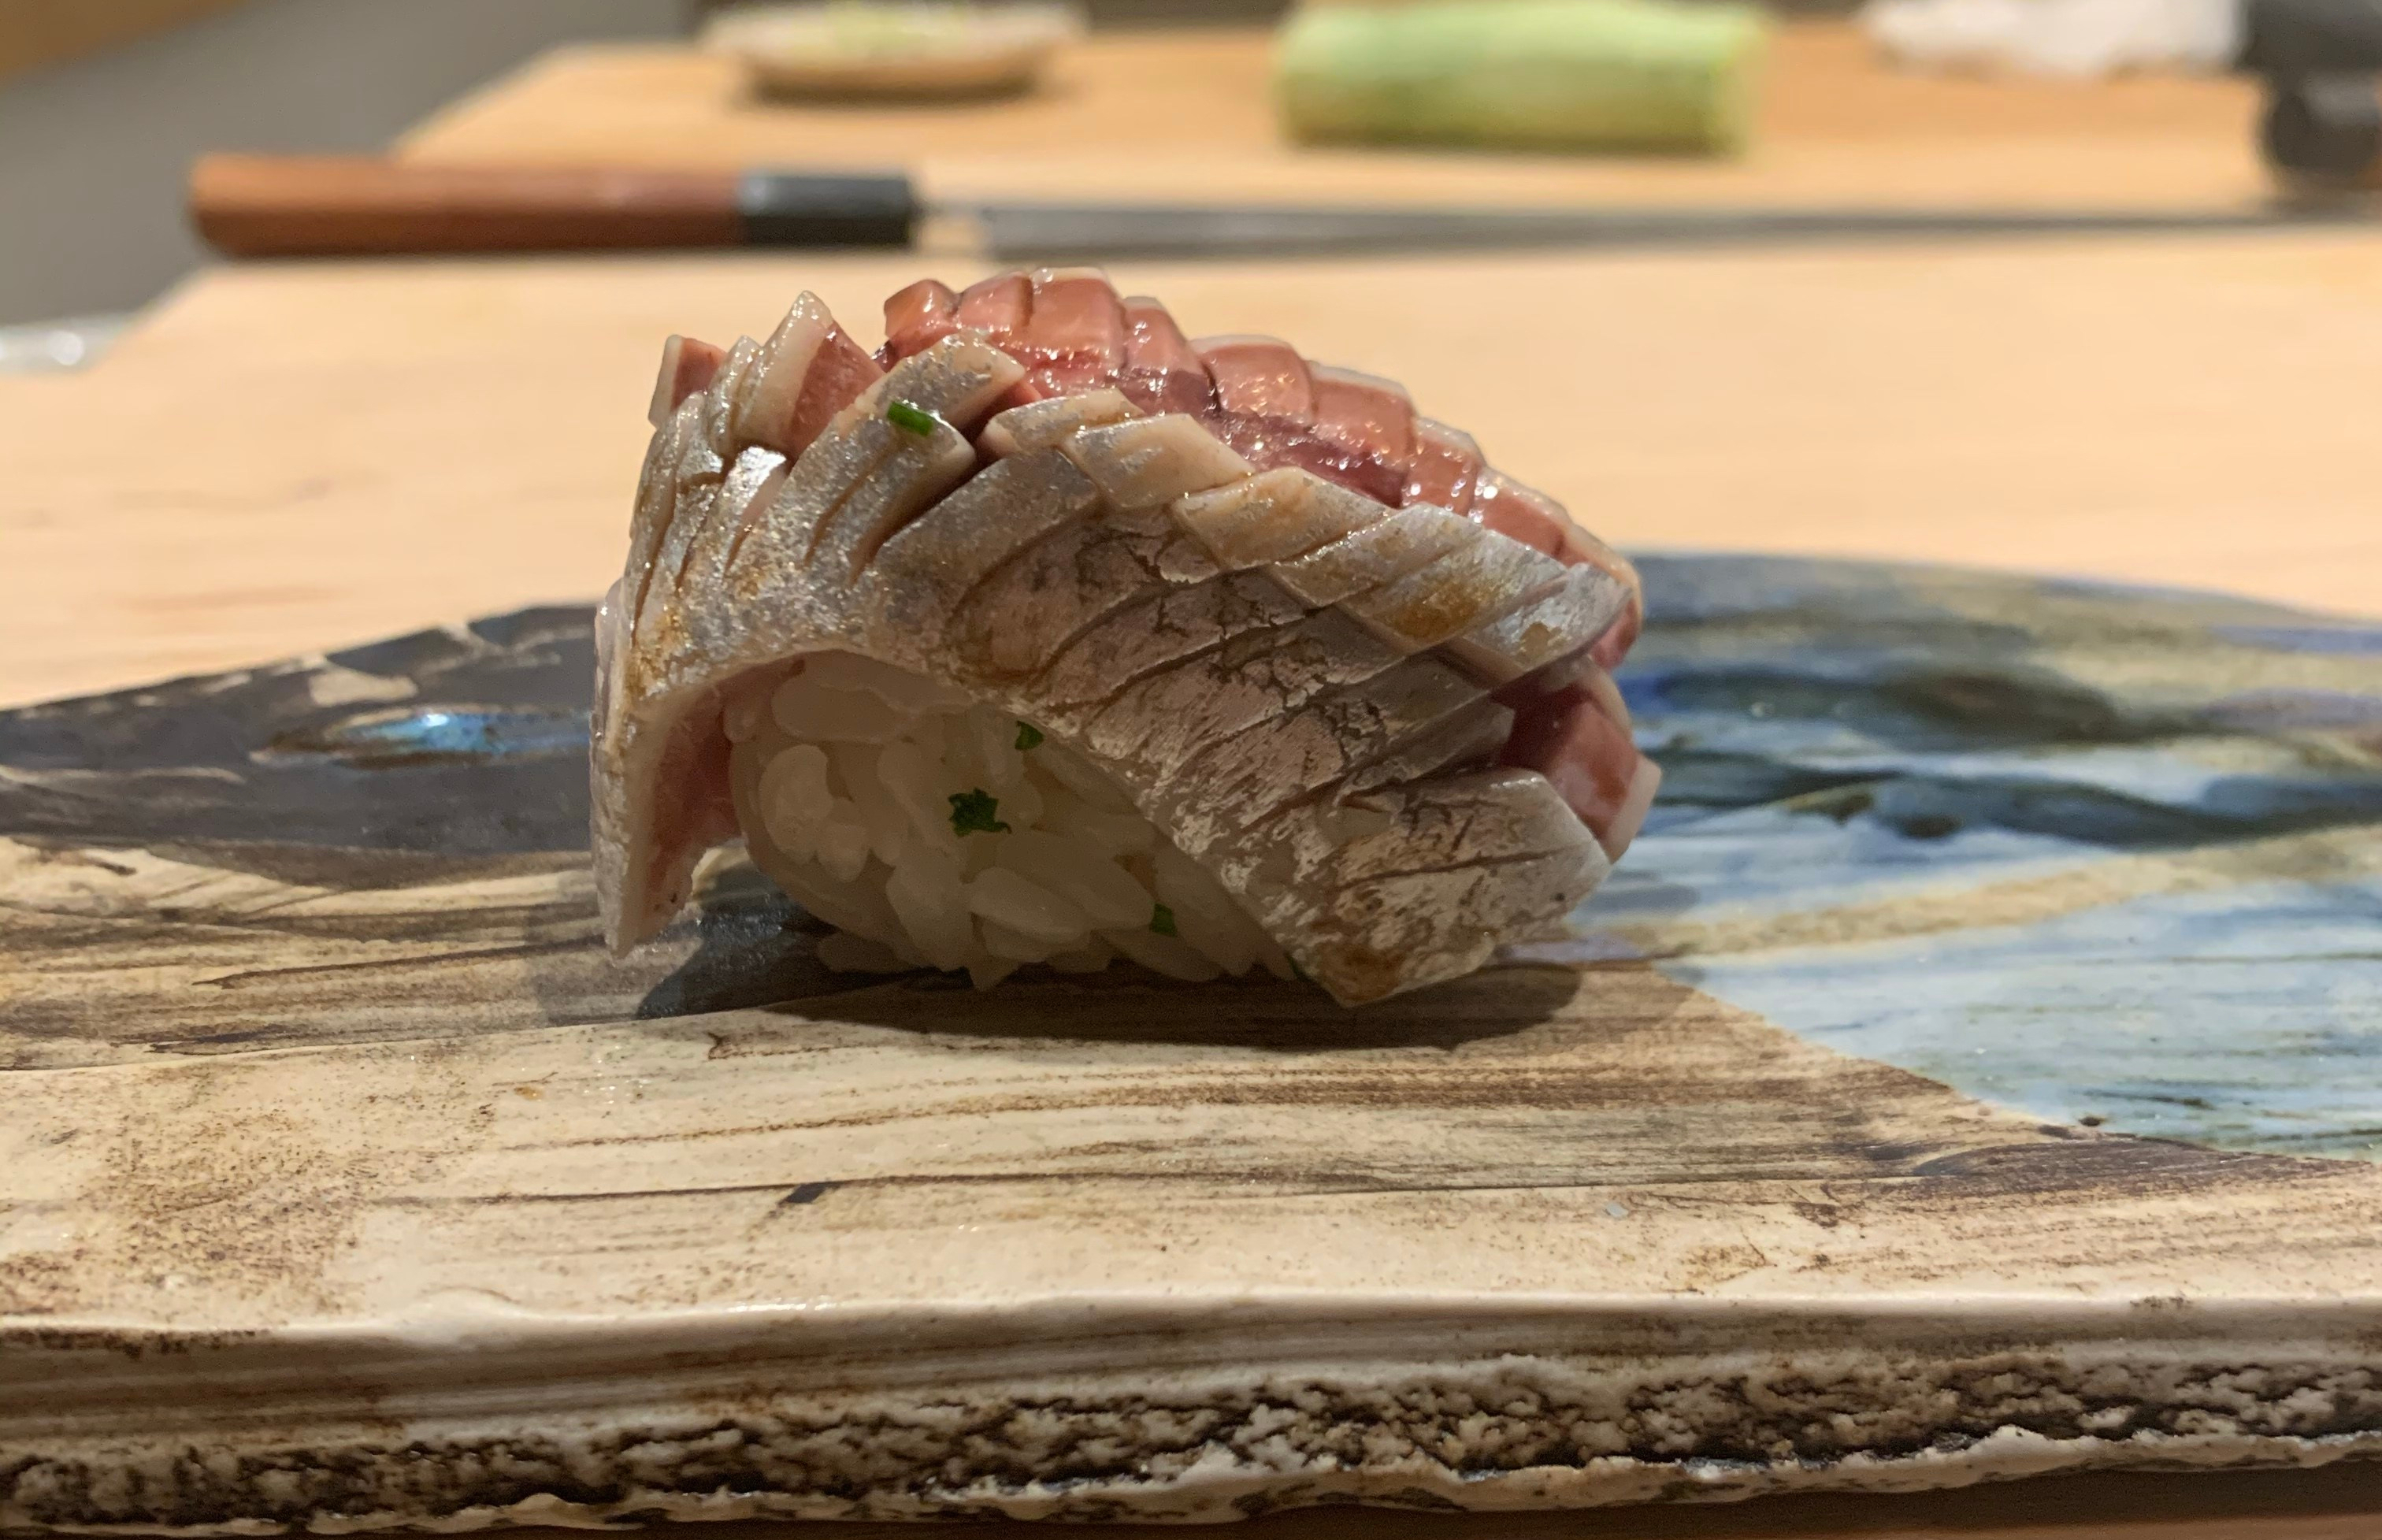 One piece of nigiri sushi with a flayed sardine filet on top